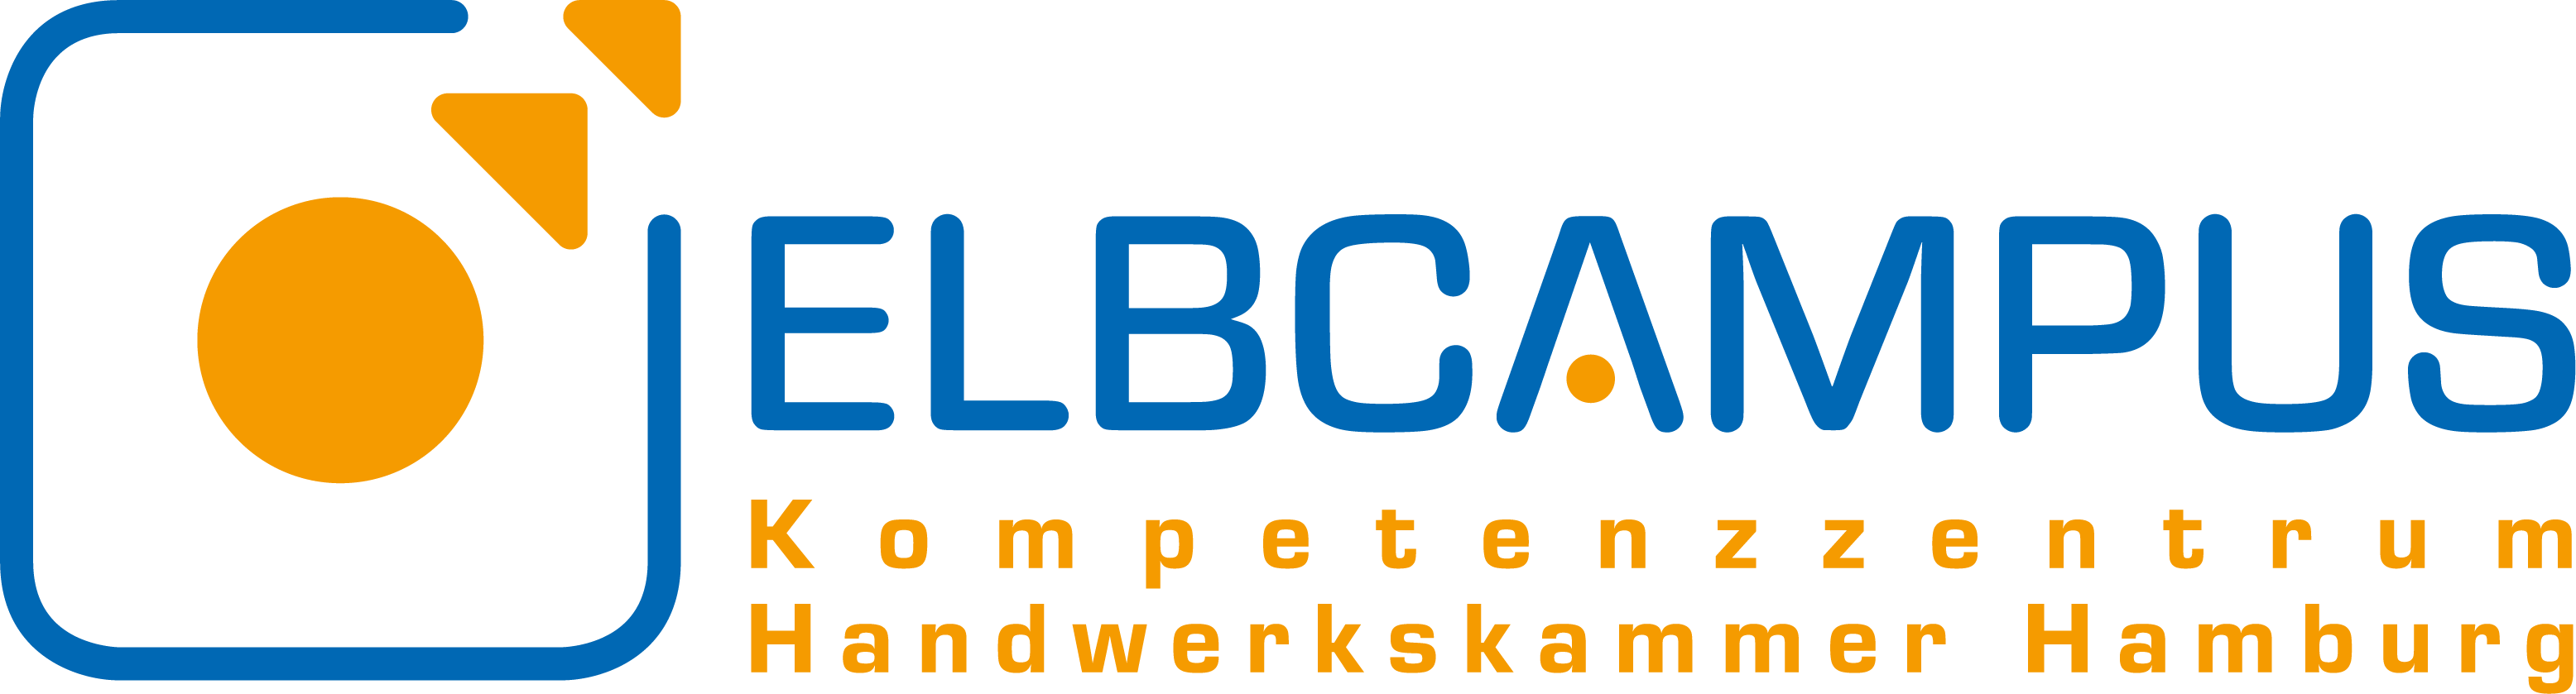 Logo-ELBCAMPUS Hamburg